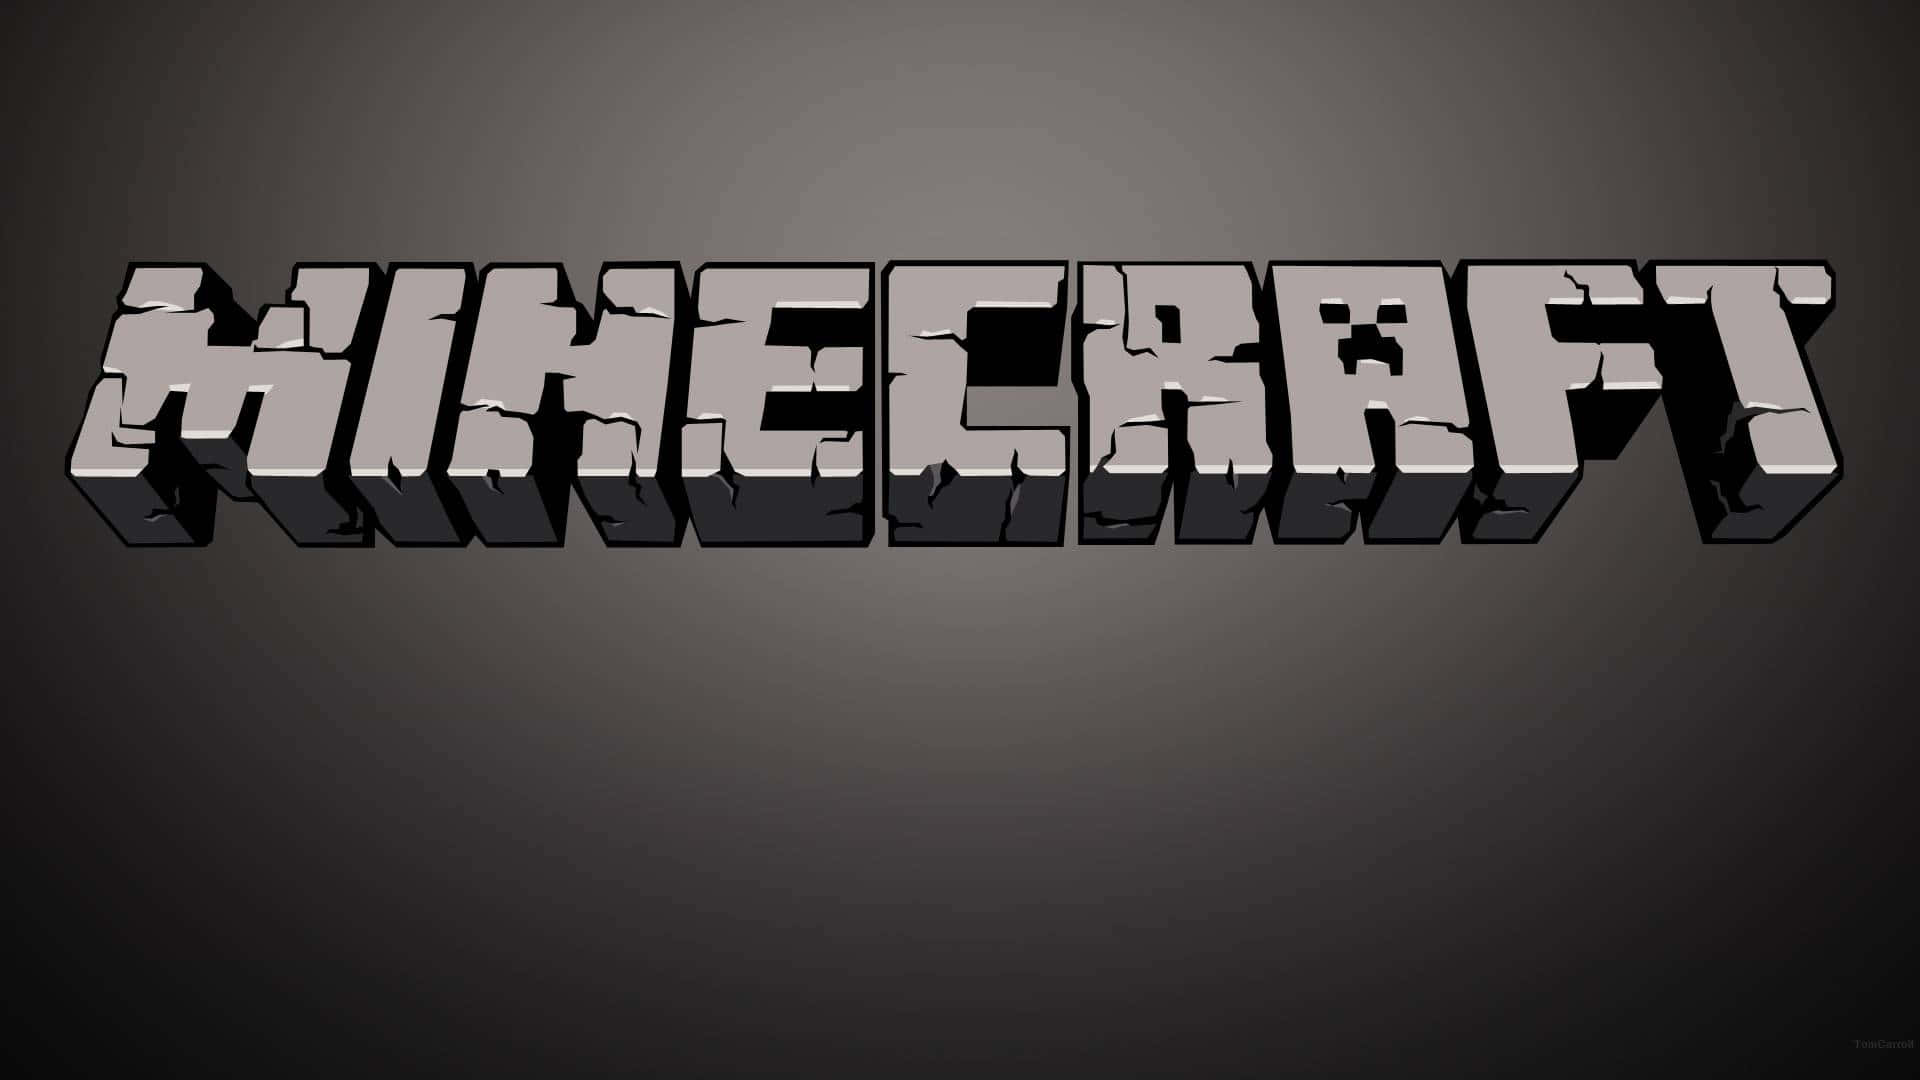 Unikthäftig Minecraft-bakgrund